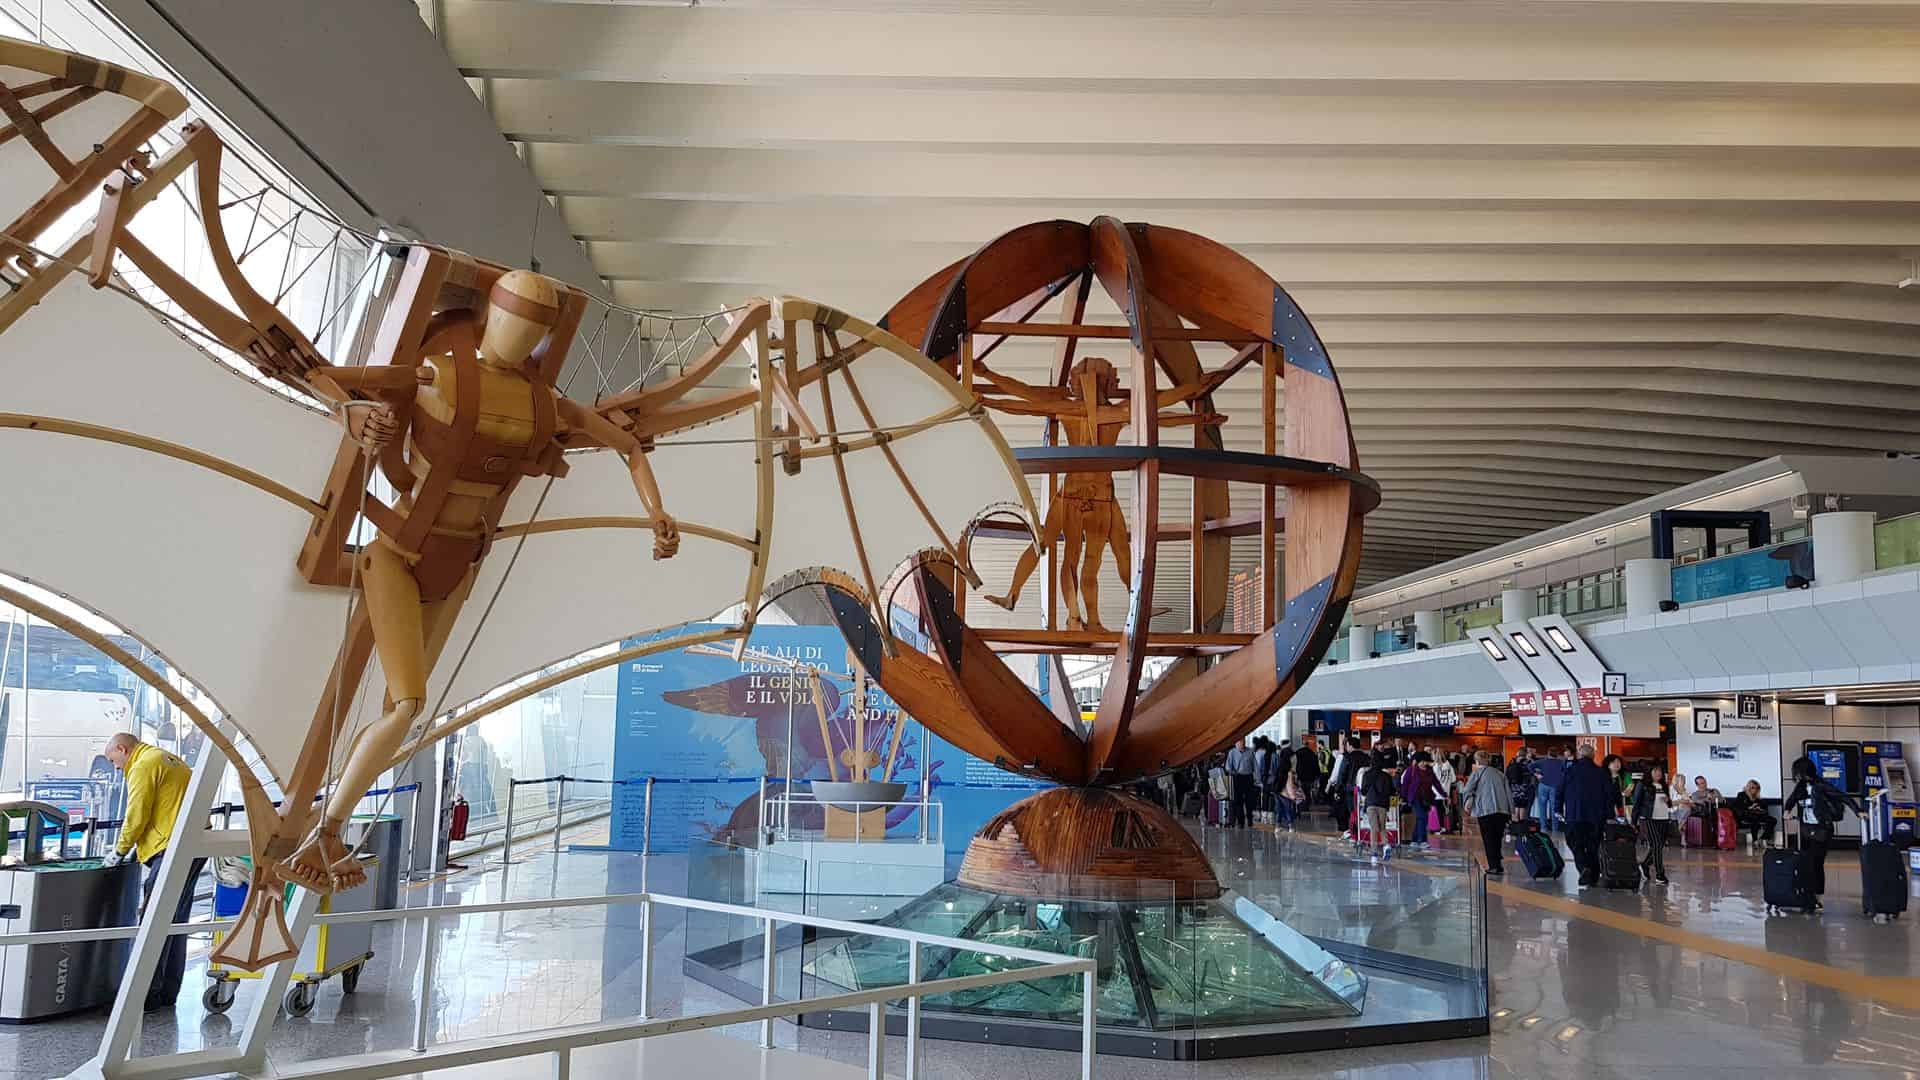 The Da Vinci imitation models inside Fiumicino Airport.